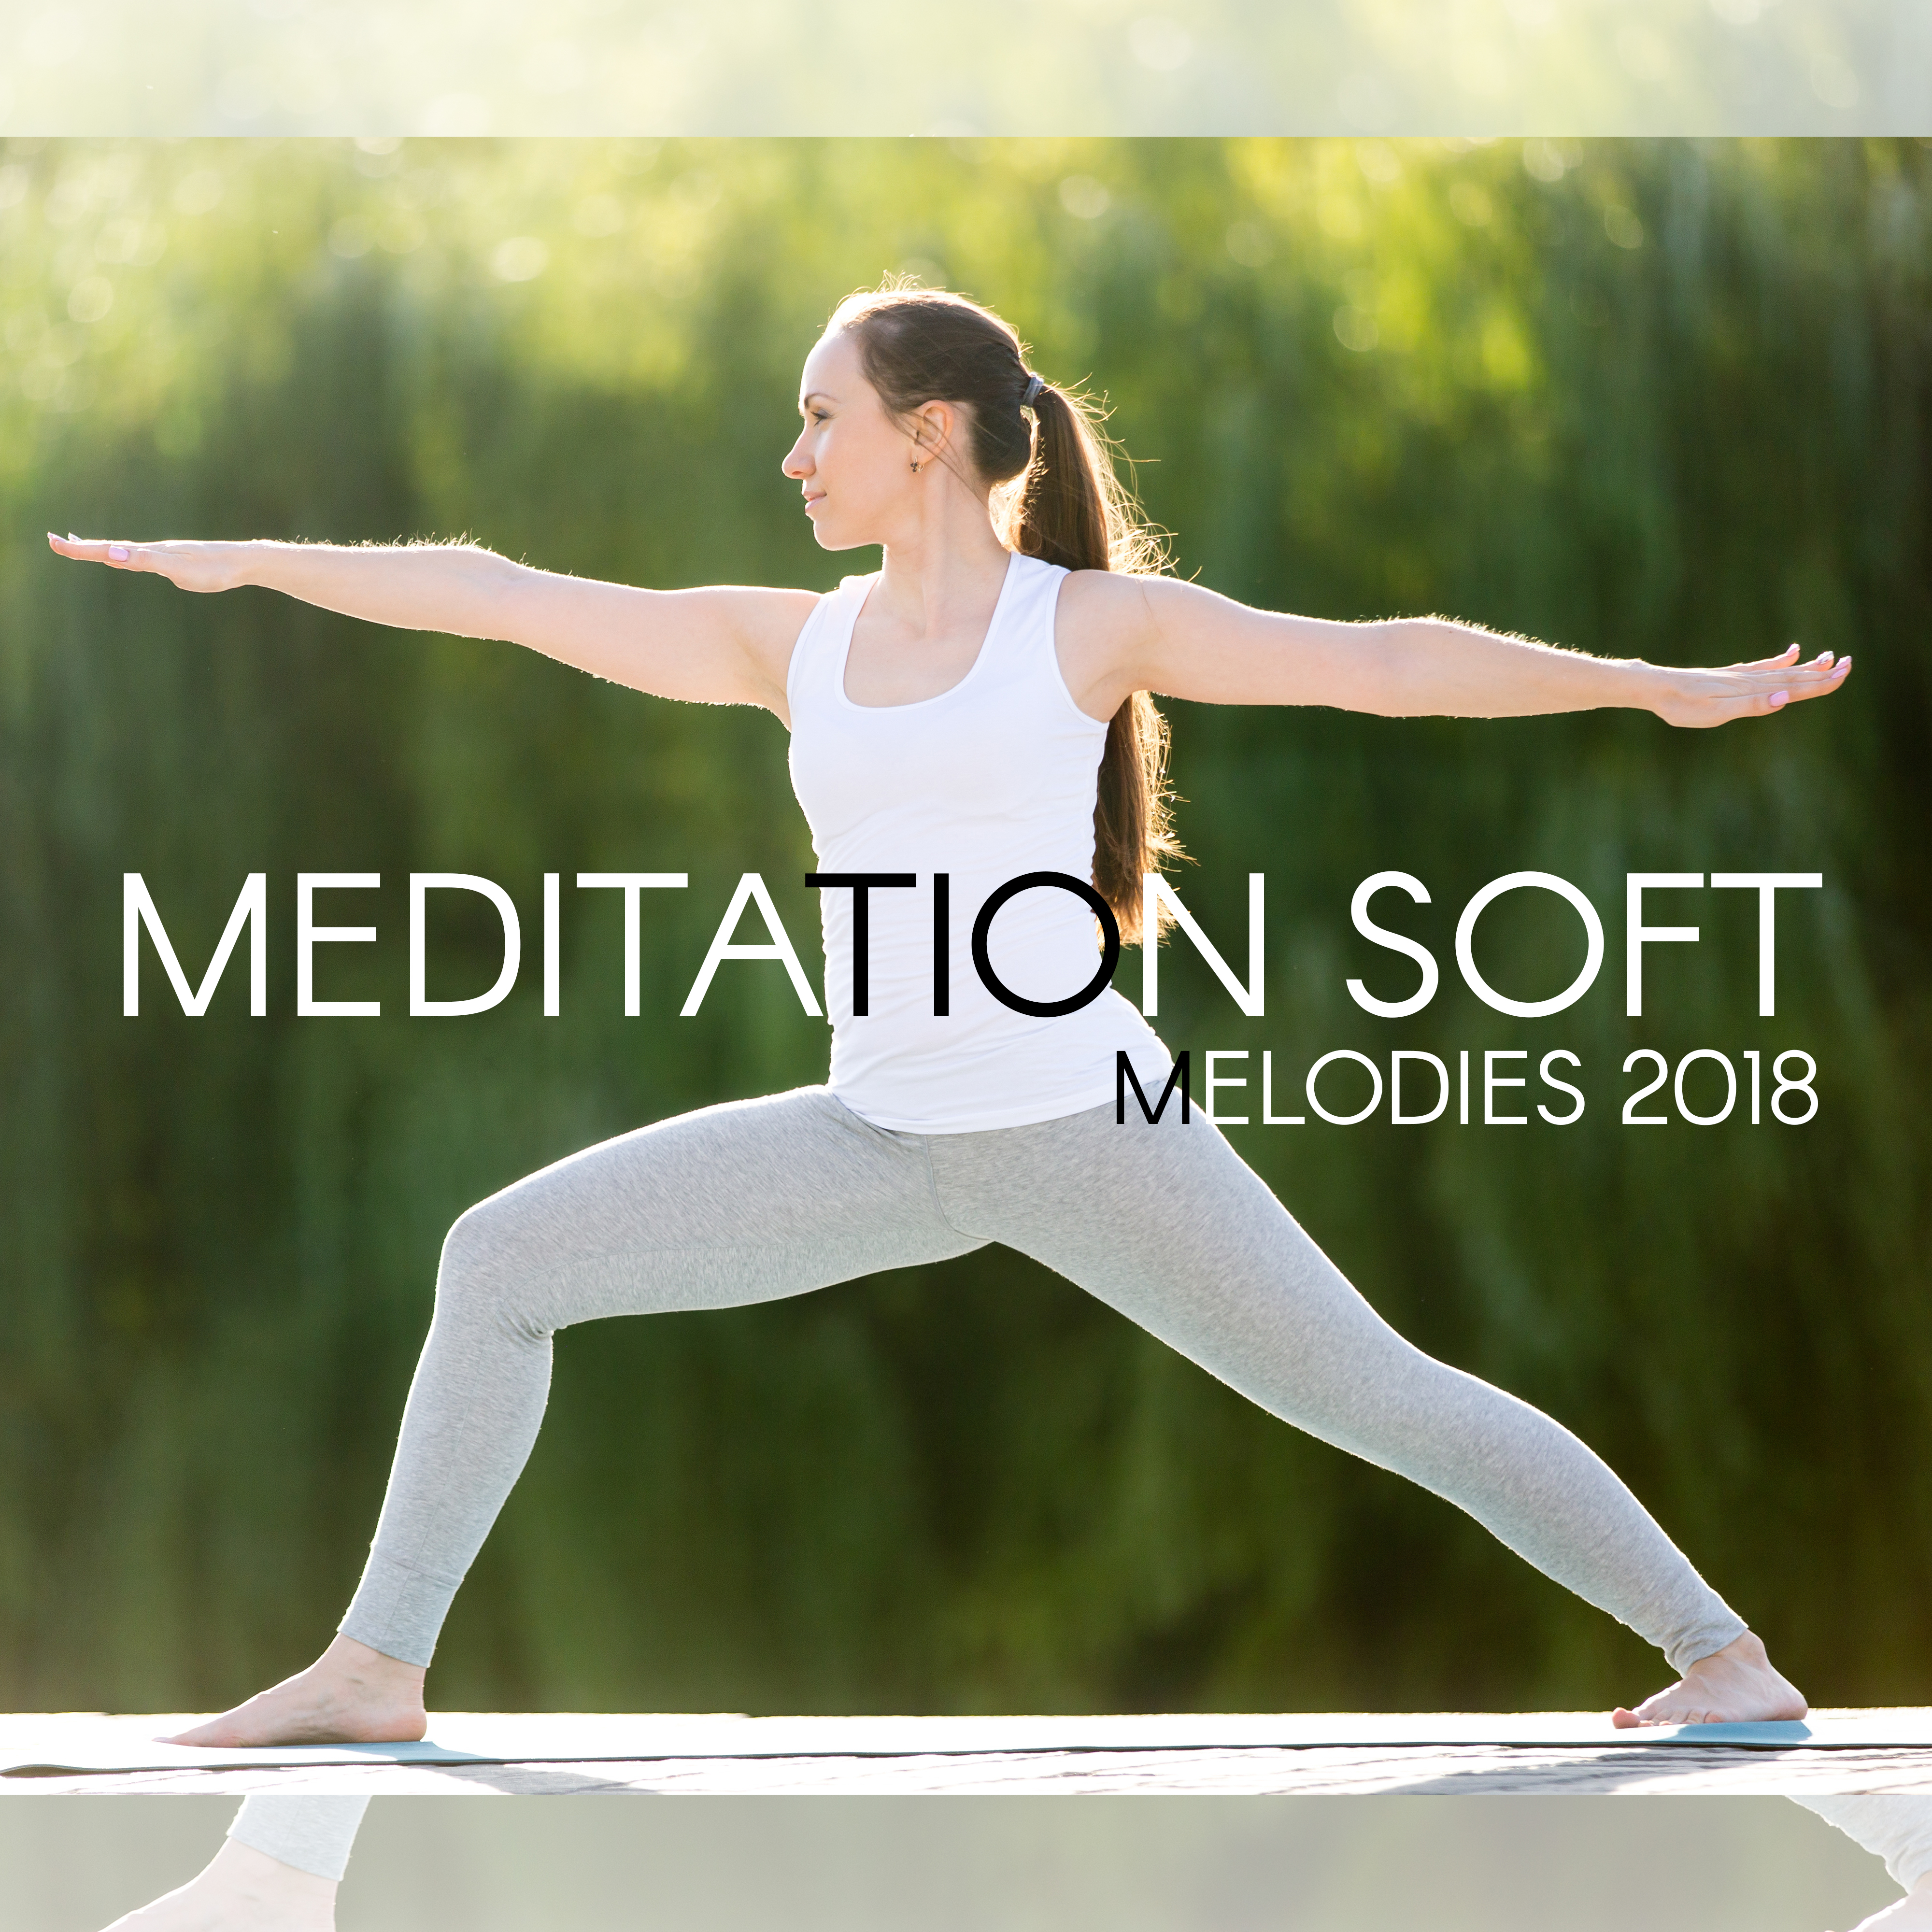 Meditation Soft Melodies 2018